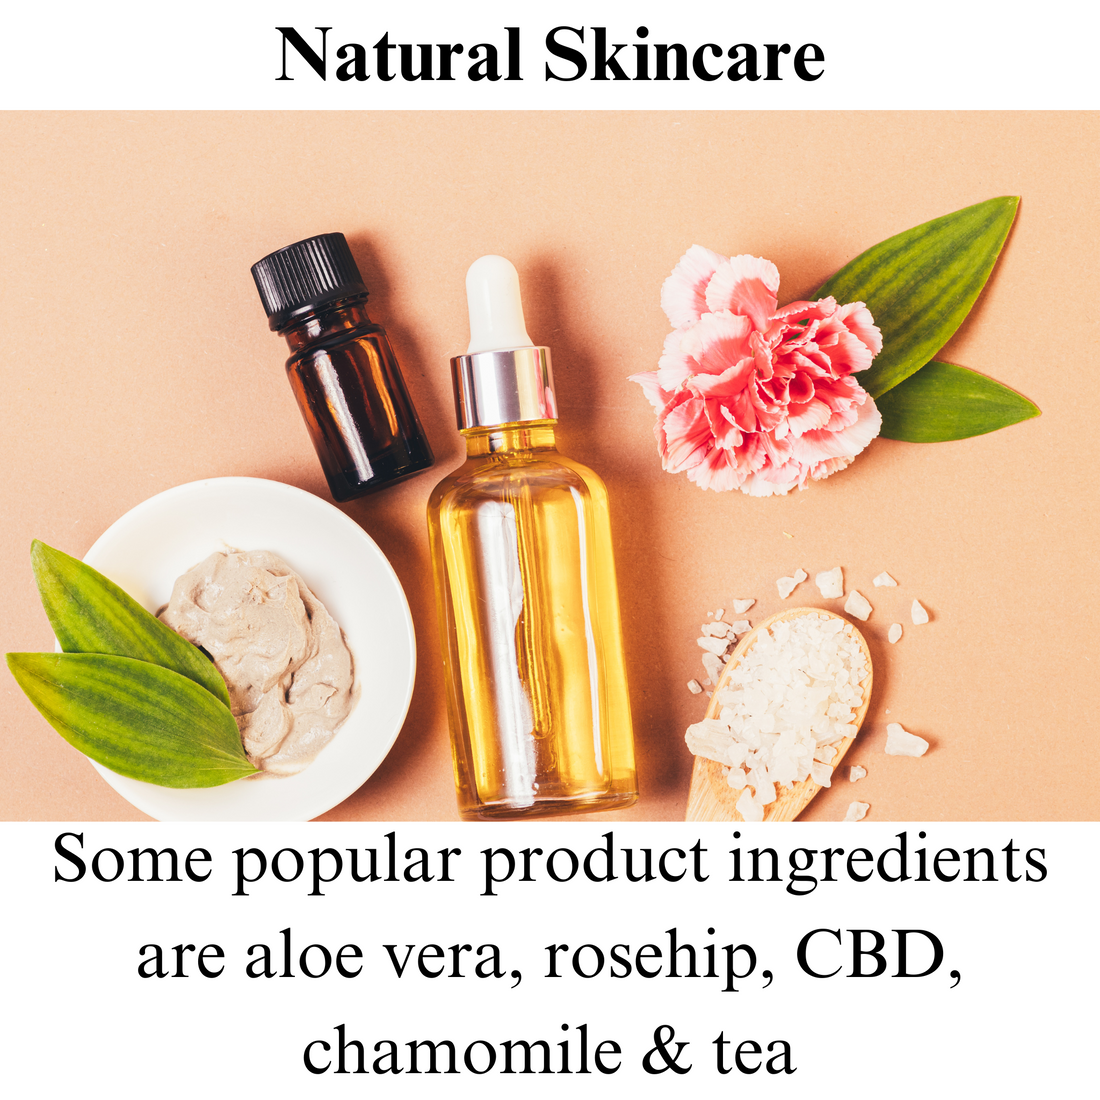 Natural skincare popular product ingredients are aloe vera, rosehip, CBD, chamomile and tea.